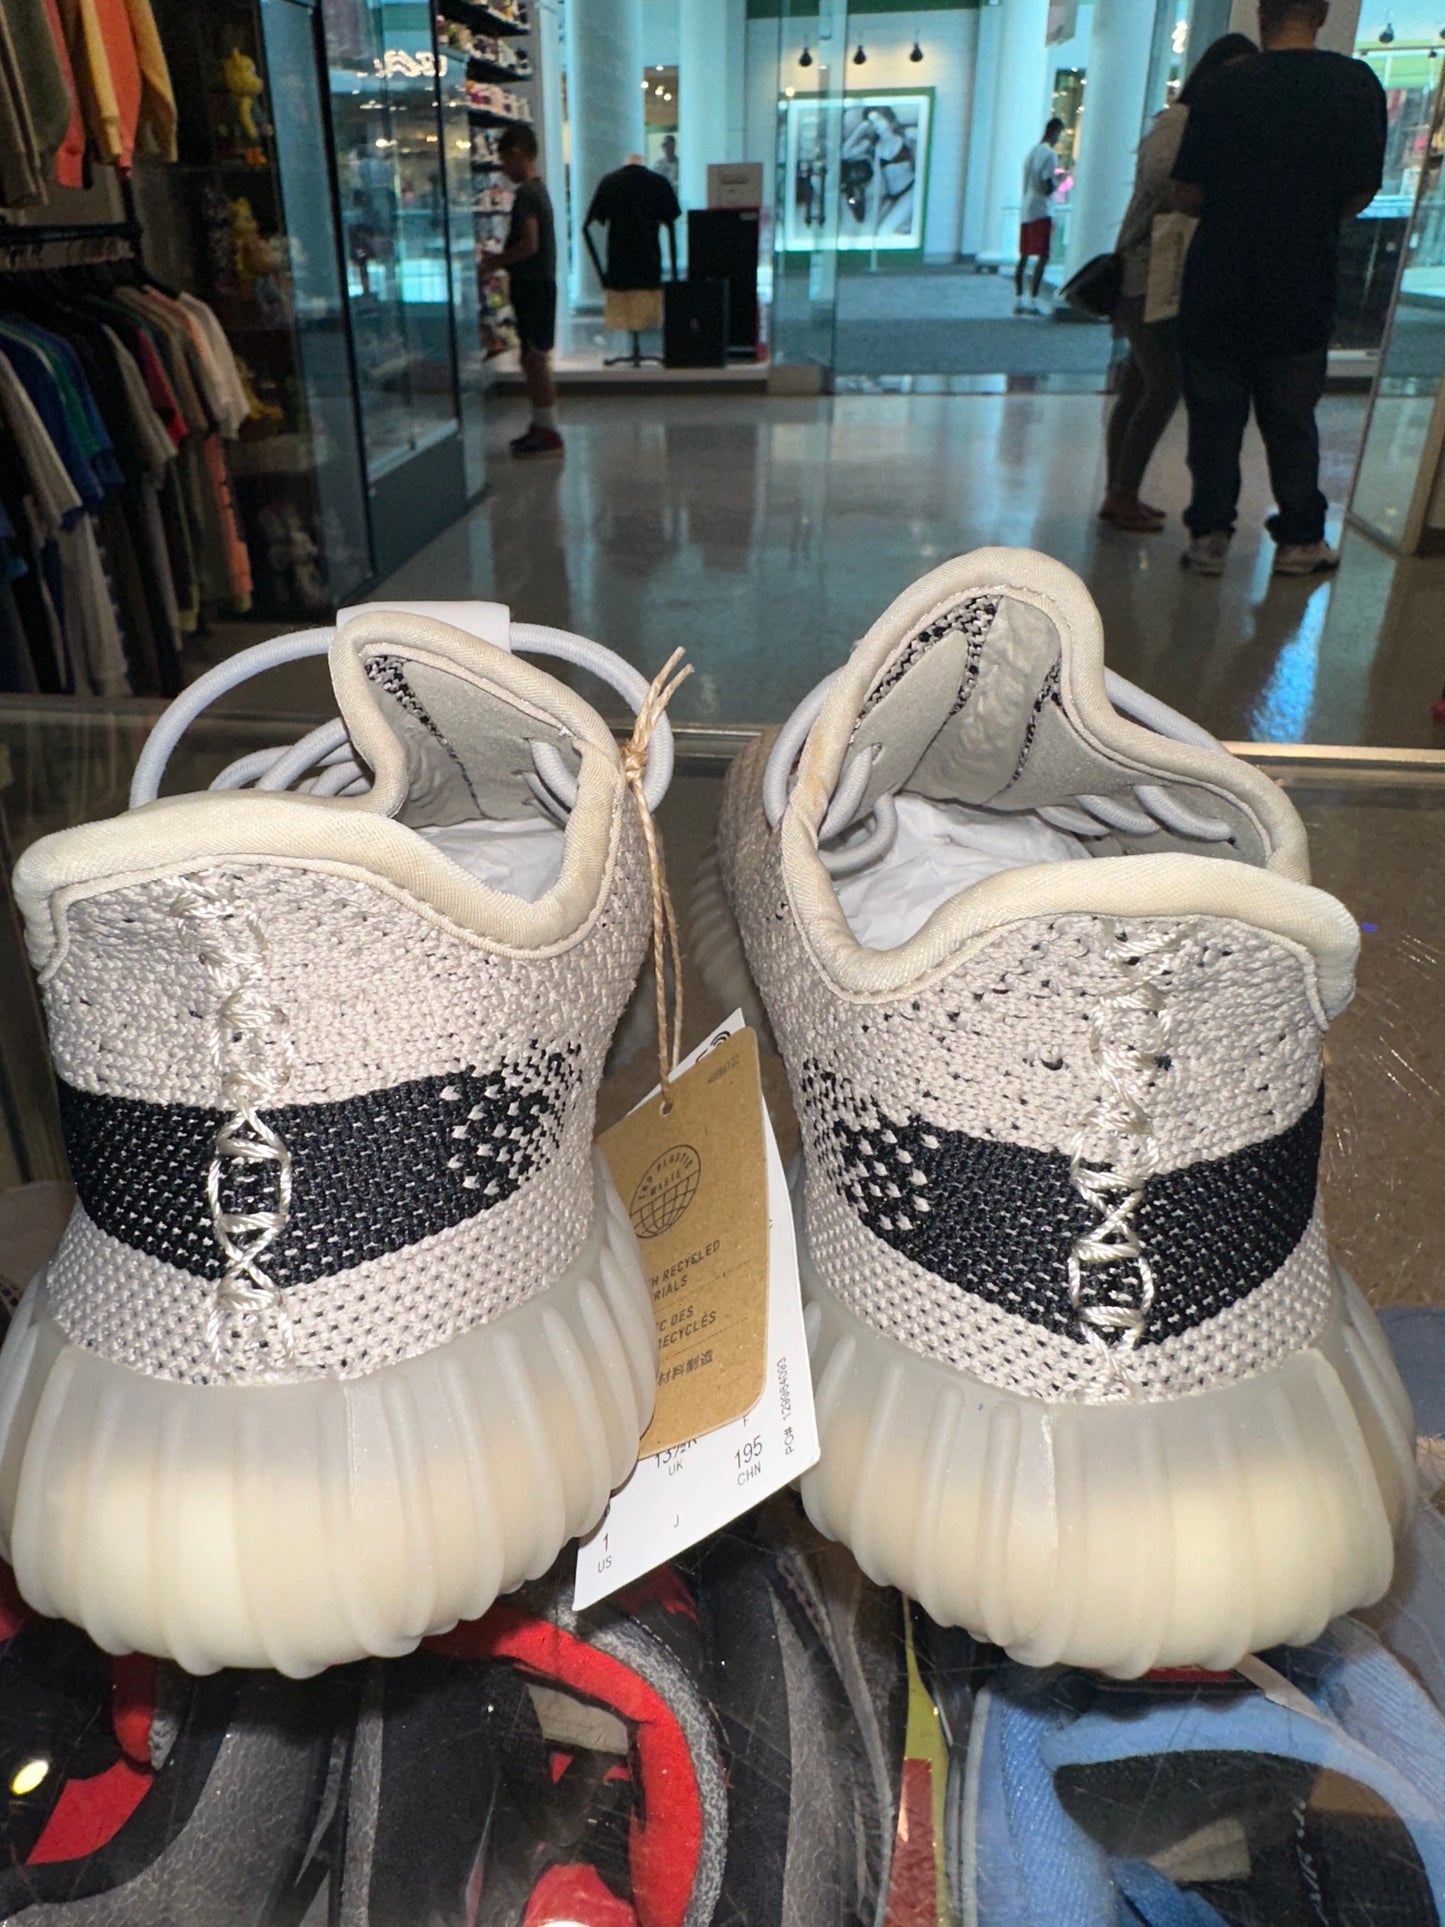 Size 1 Adidas Yeezy Boost 350 V2 KIDS “Slate” Brand New (Mall)